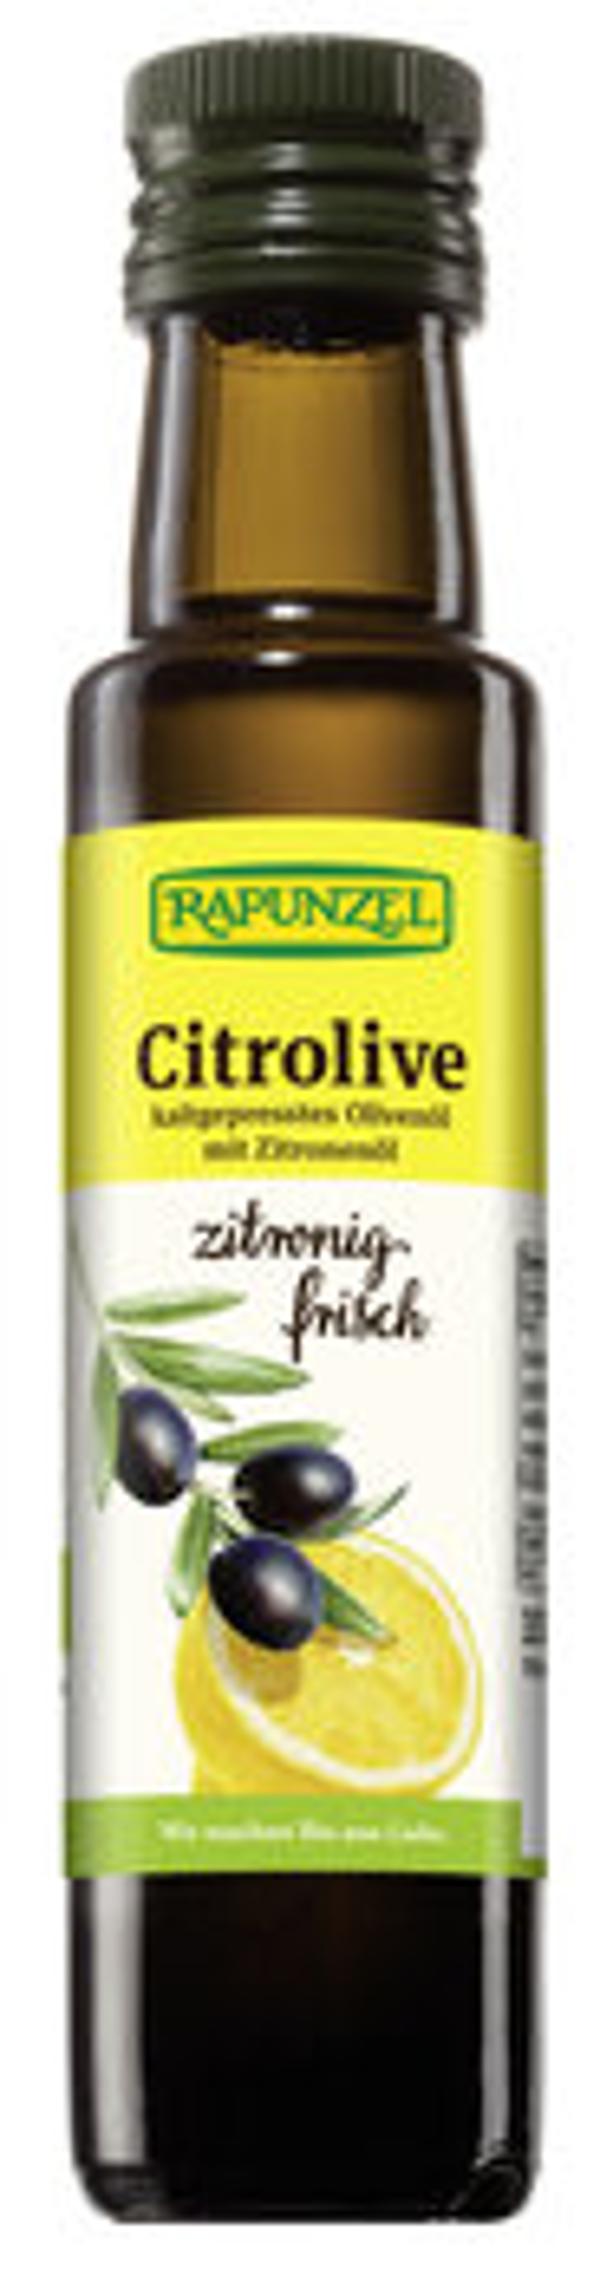 Produktfoto zu Citrolive, 100 ml